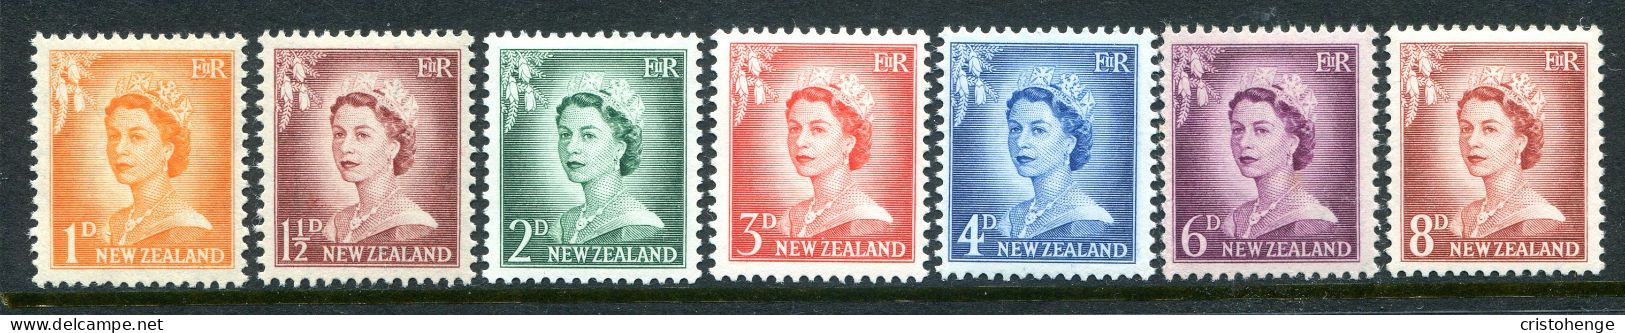 New Zealand 1955-59 QEII Large Figure Definitives Set MNH/LHM (SG 745-751) - Ongebruikt